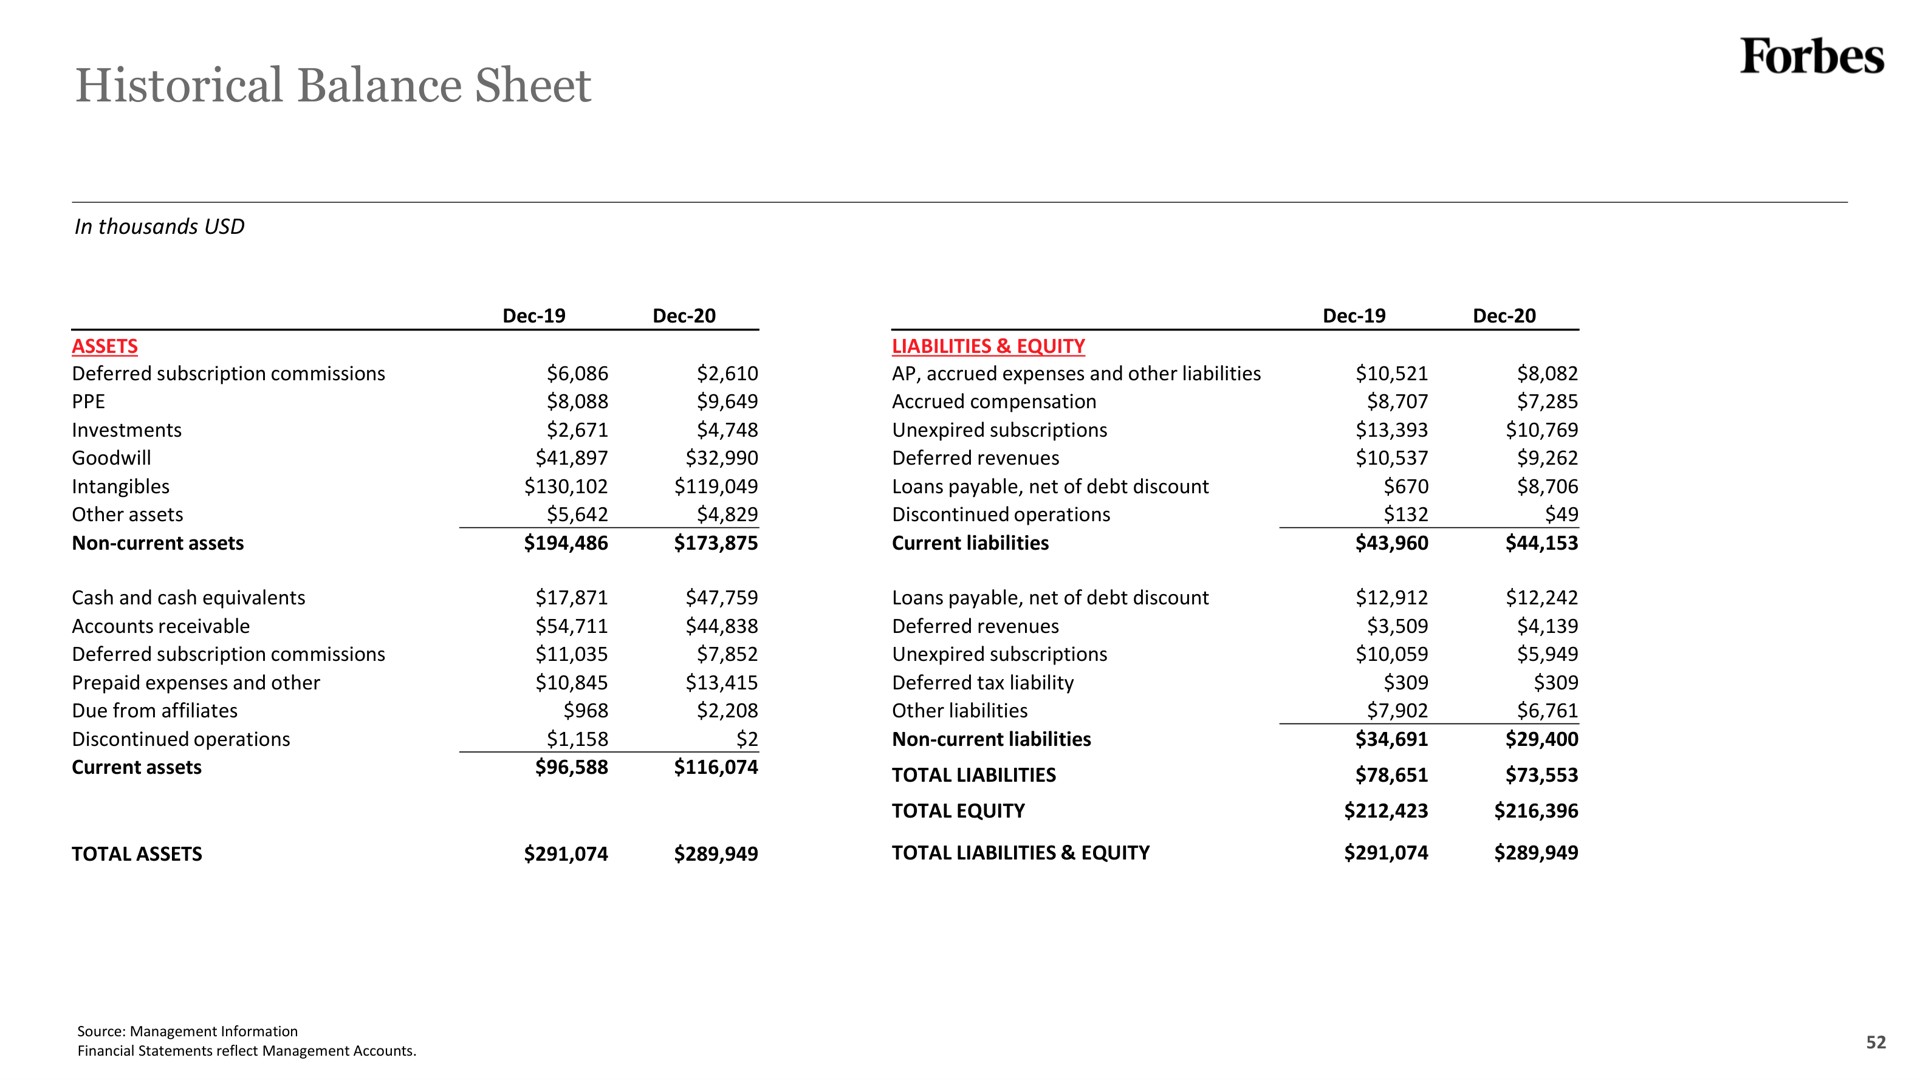 historical balance sheet | Forbes